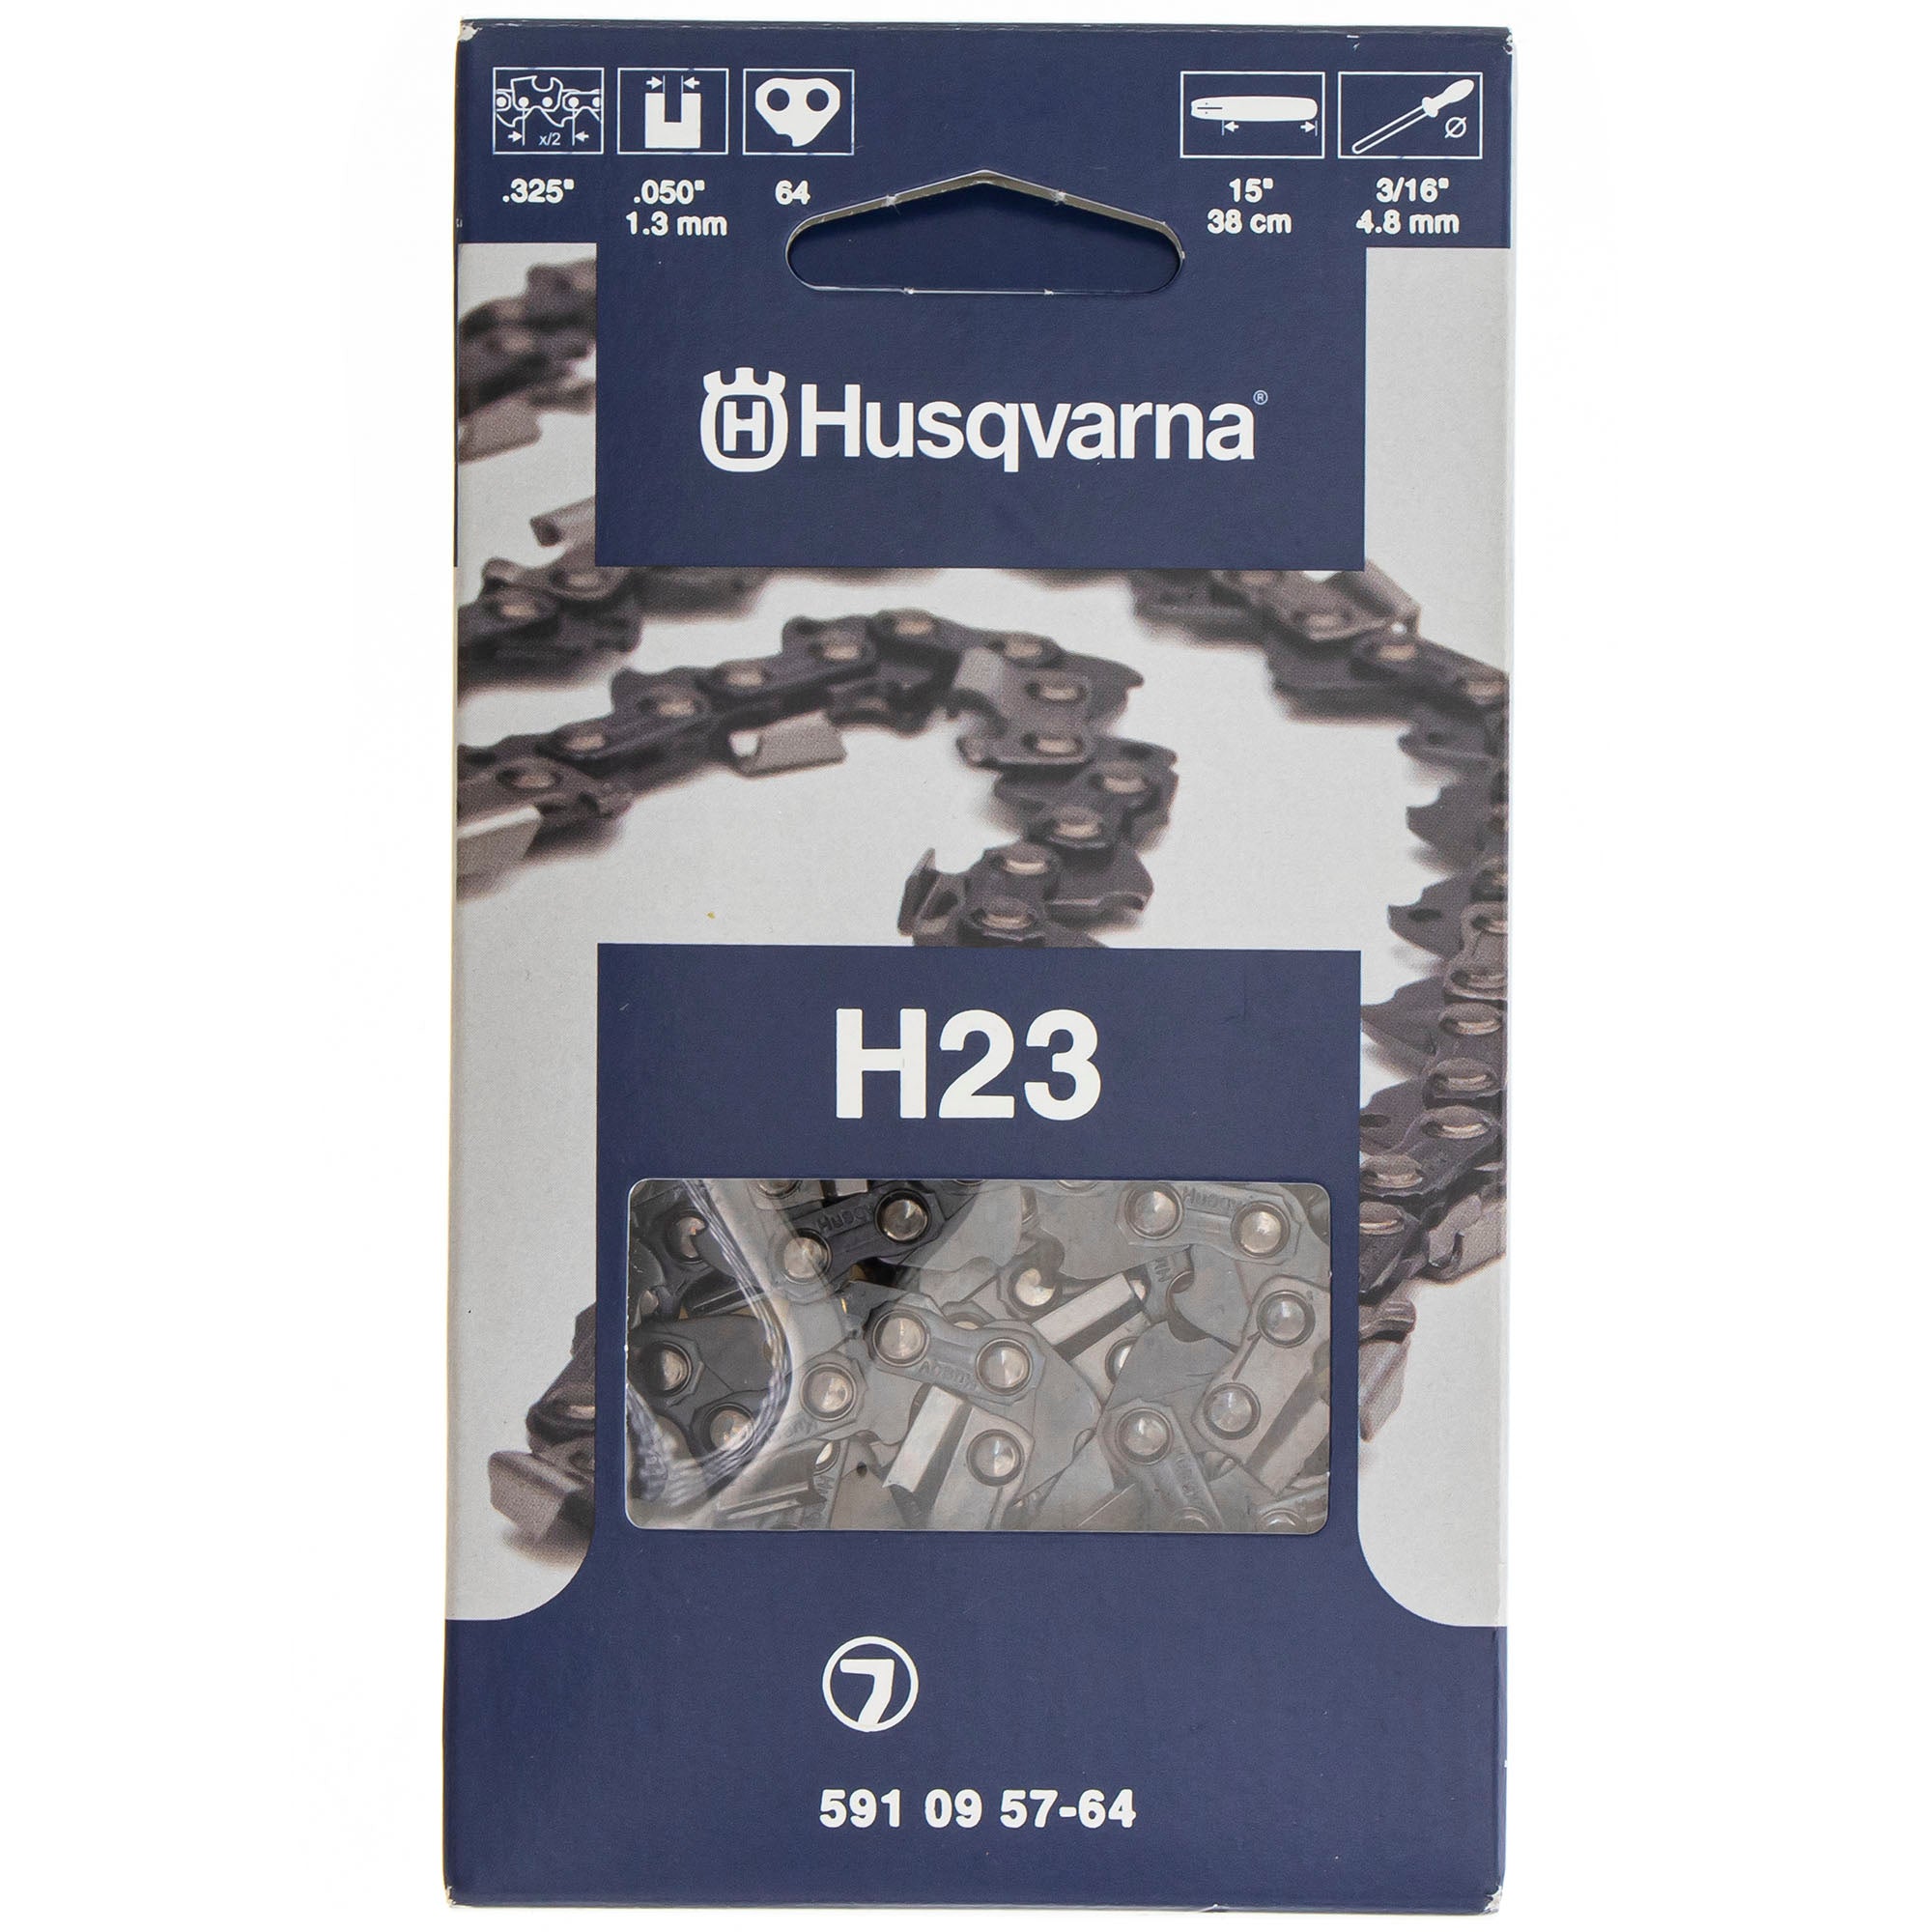 Husqvarna 591095764 Chainsaw Chain